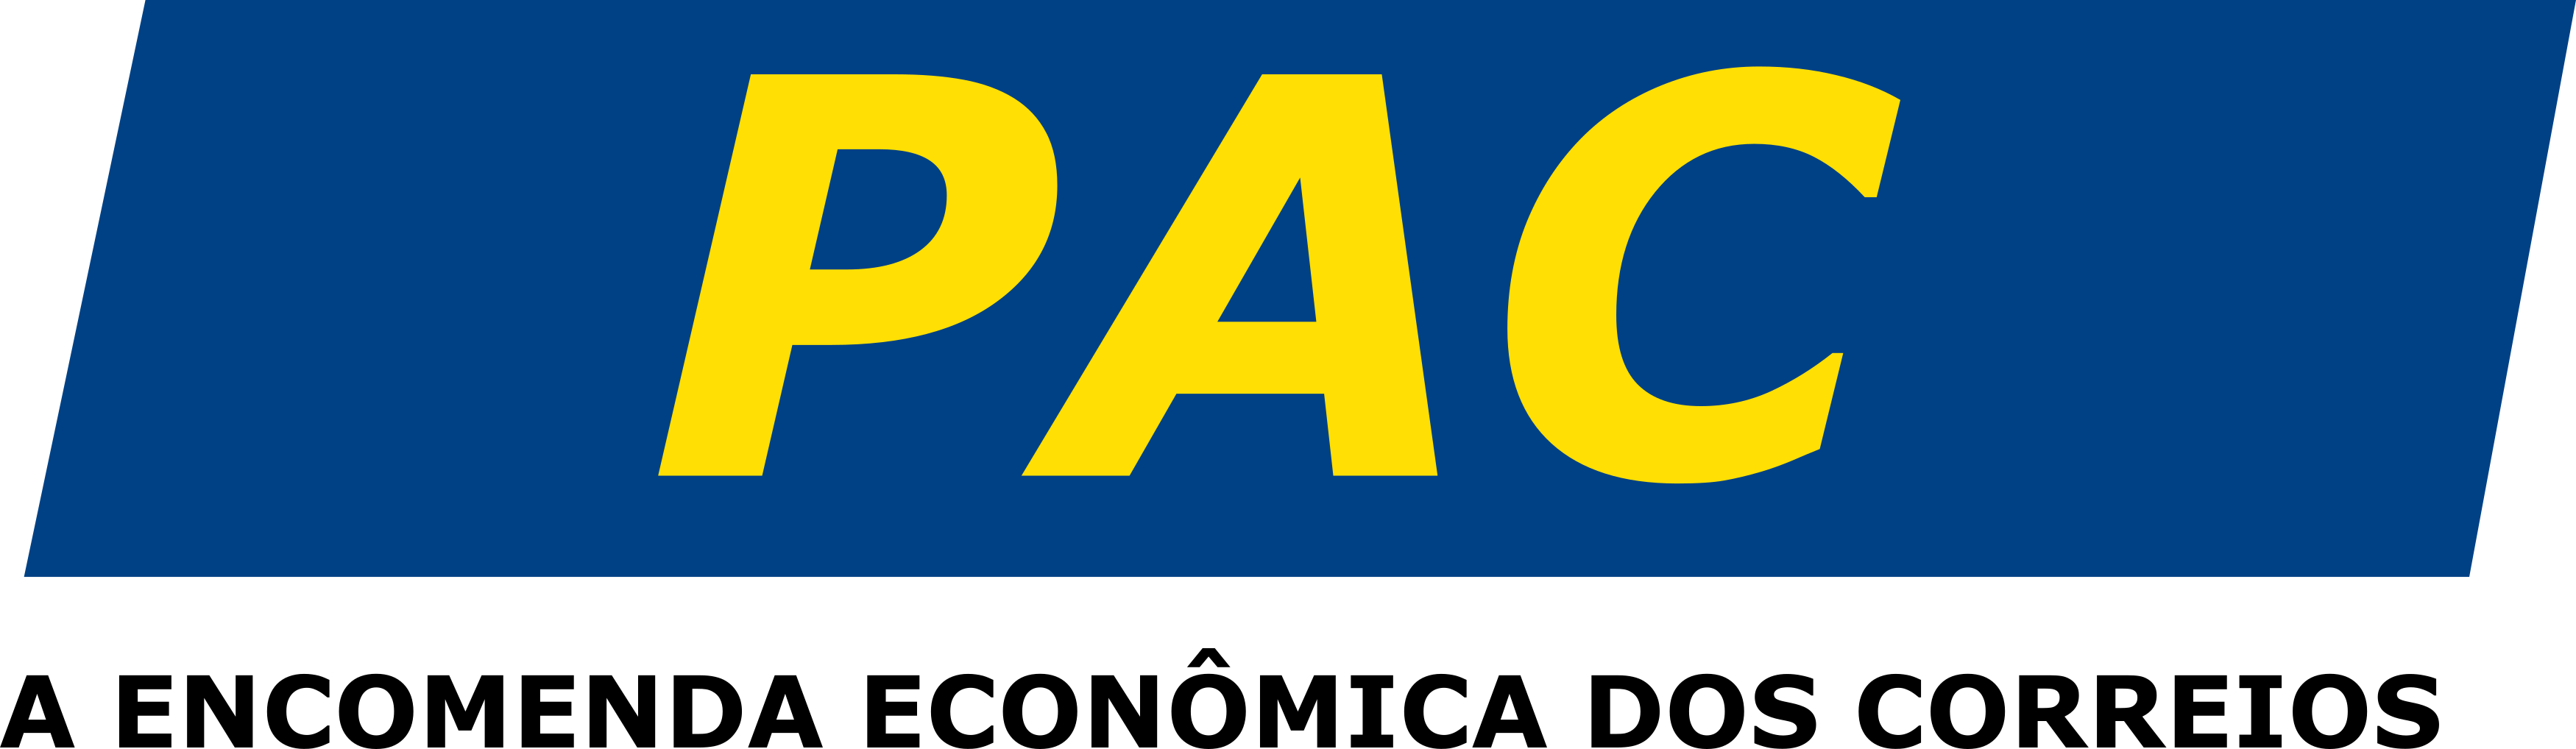 pac.png PlusPng.com 